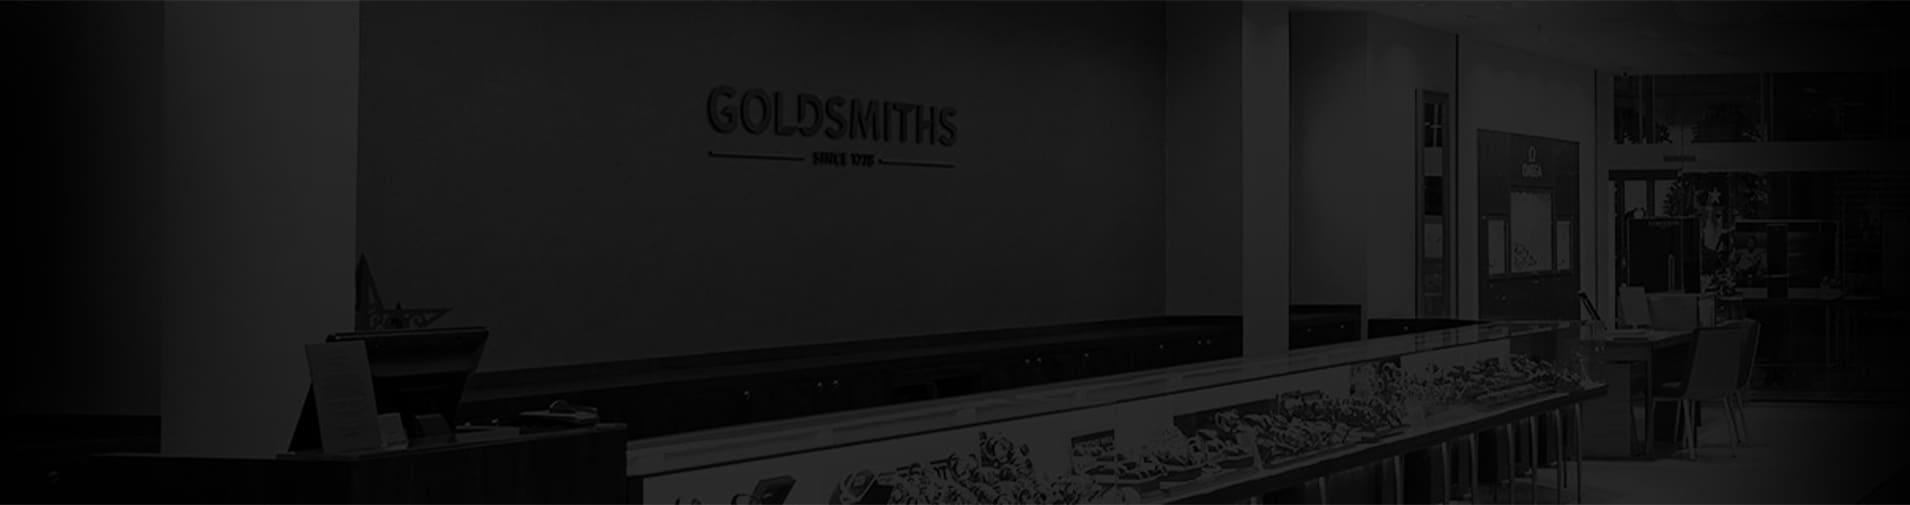 Goldsmith Guides